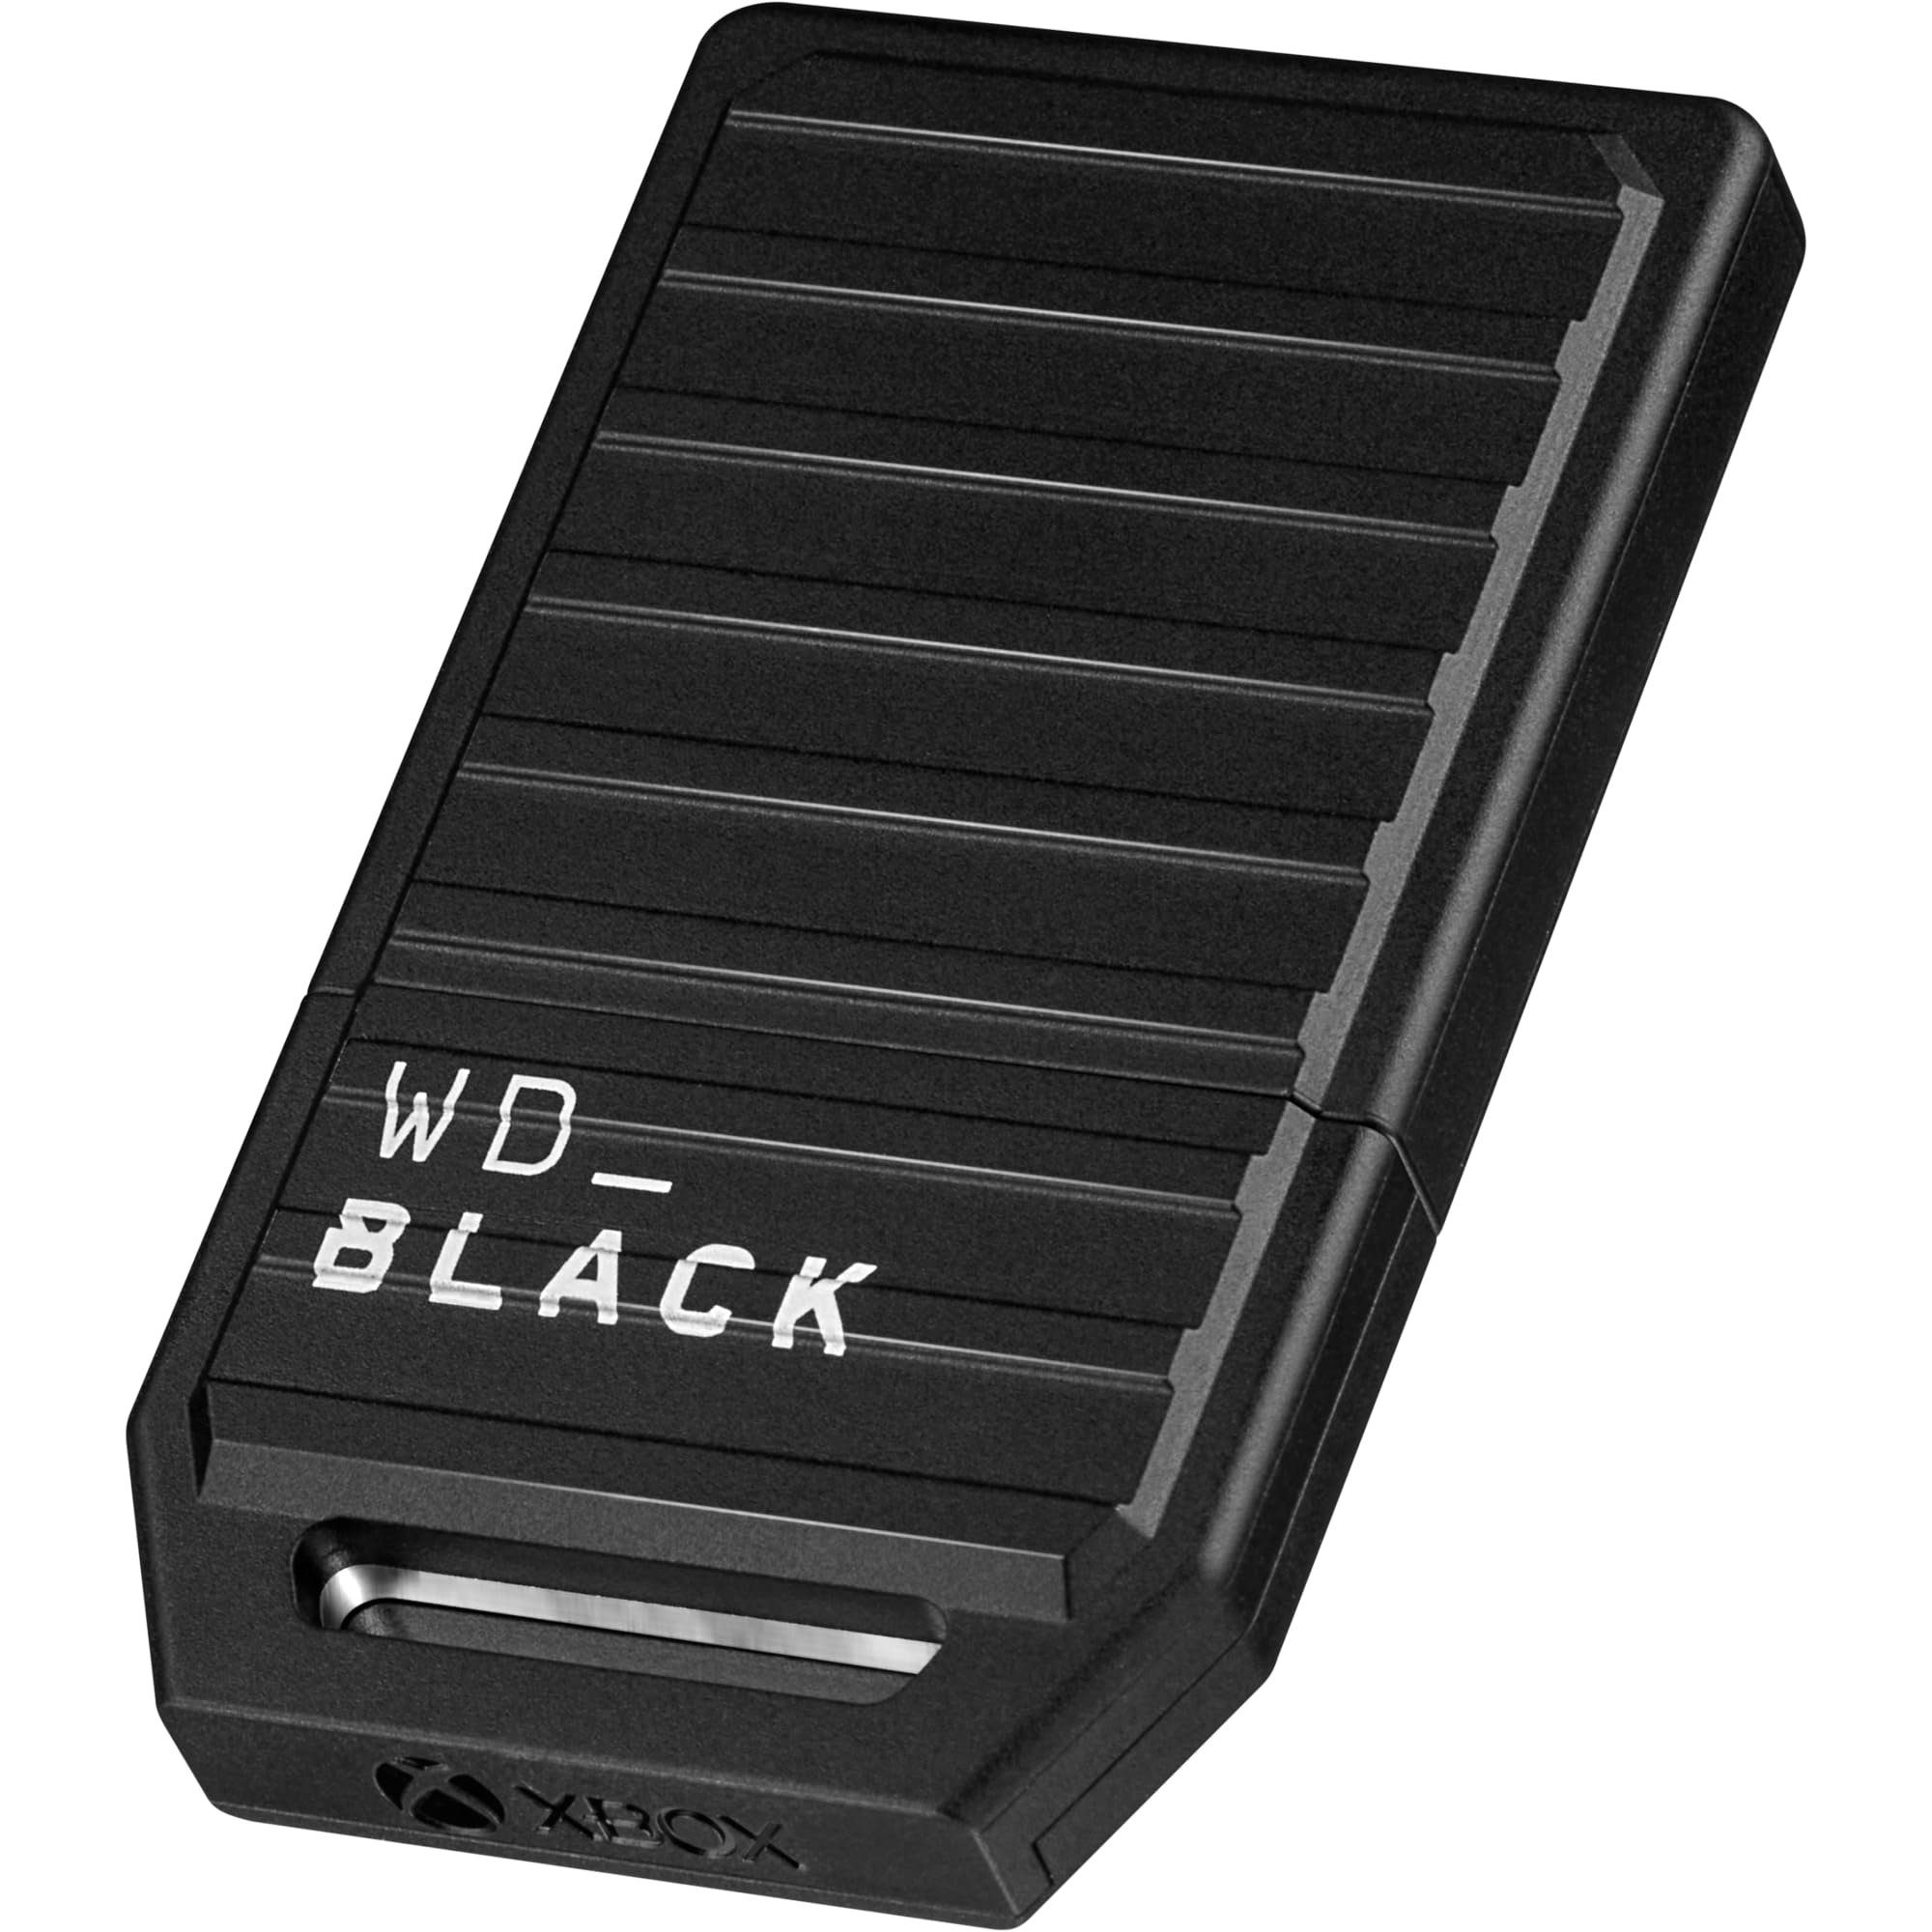 SSD-Speicherkarte Expansion TB), for externe Card (1 WD_Black C50 Xbox SSD